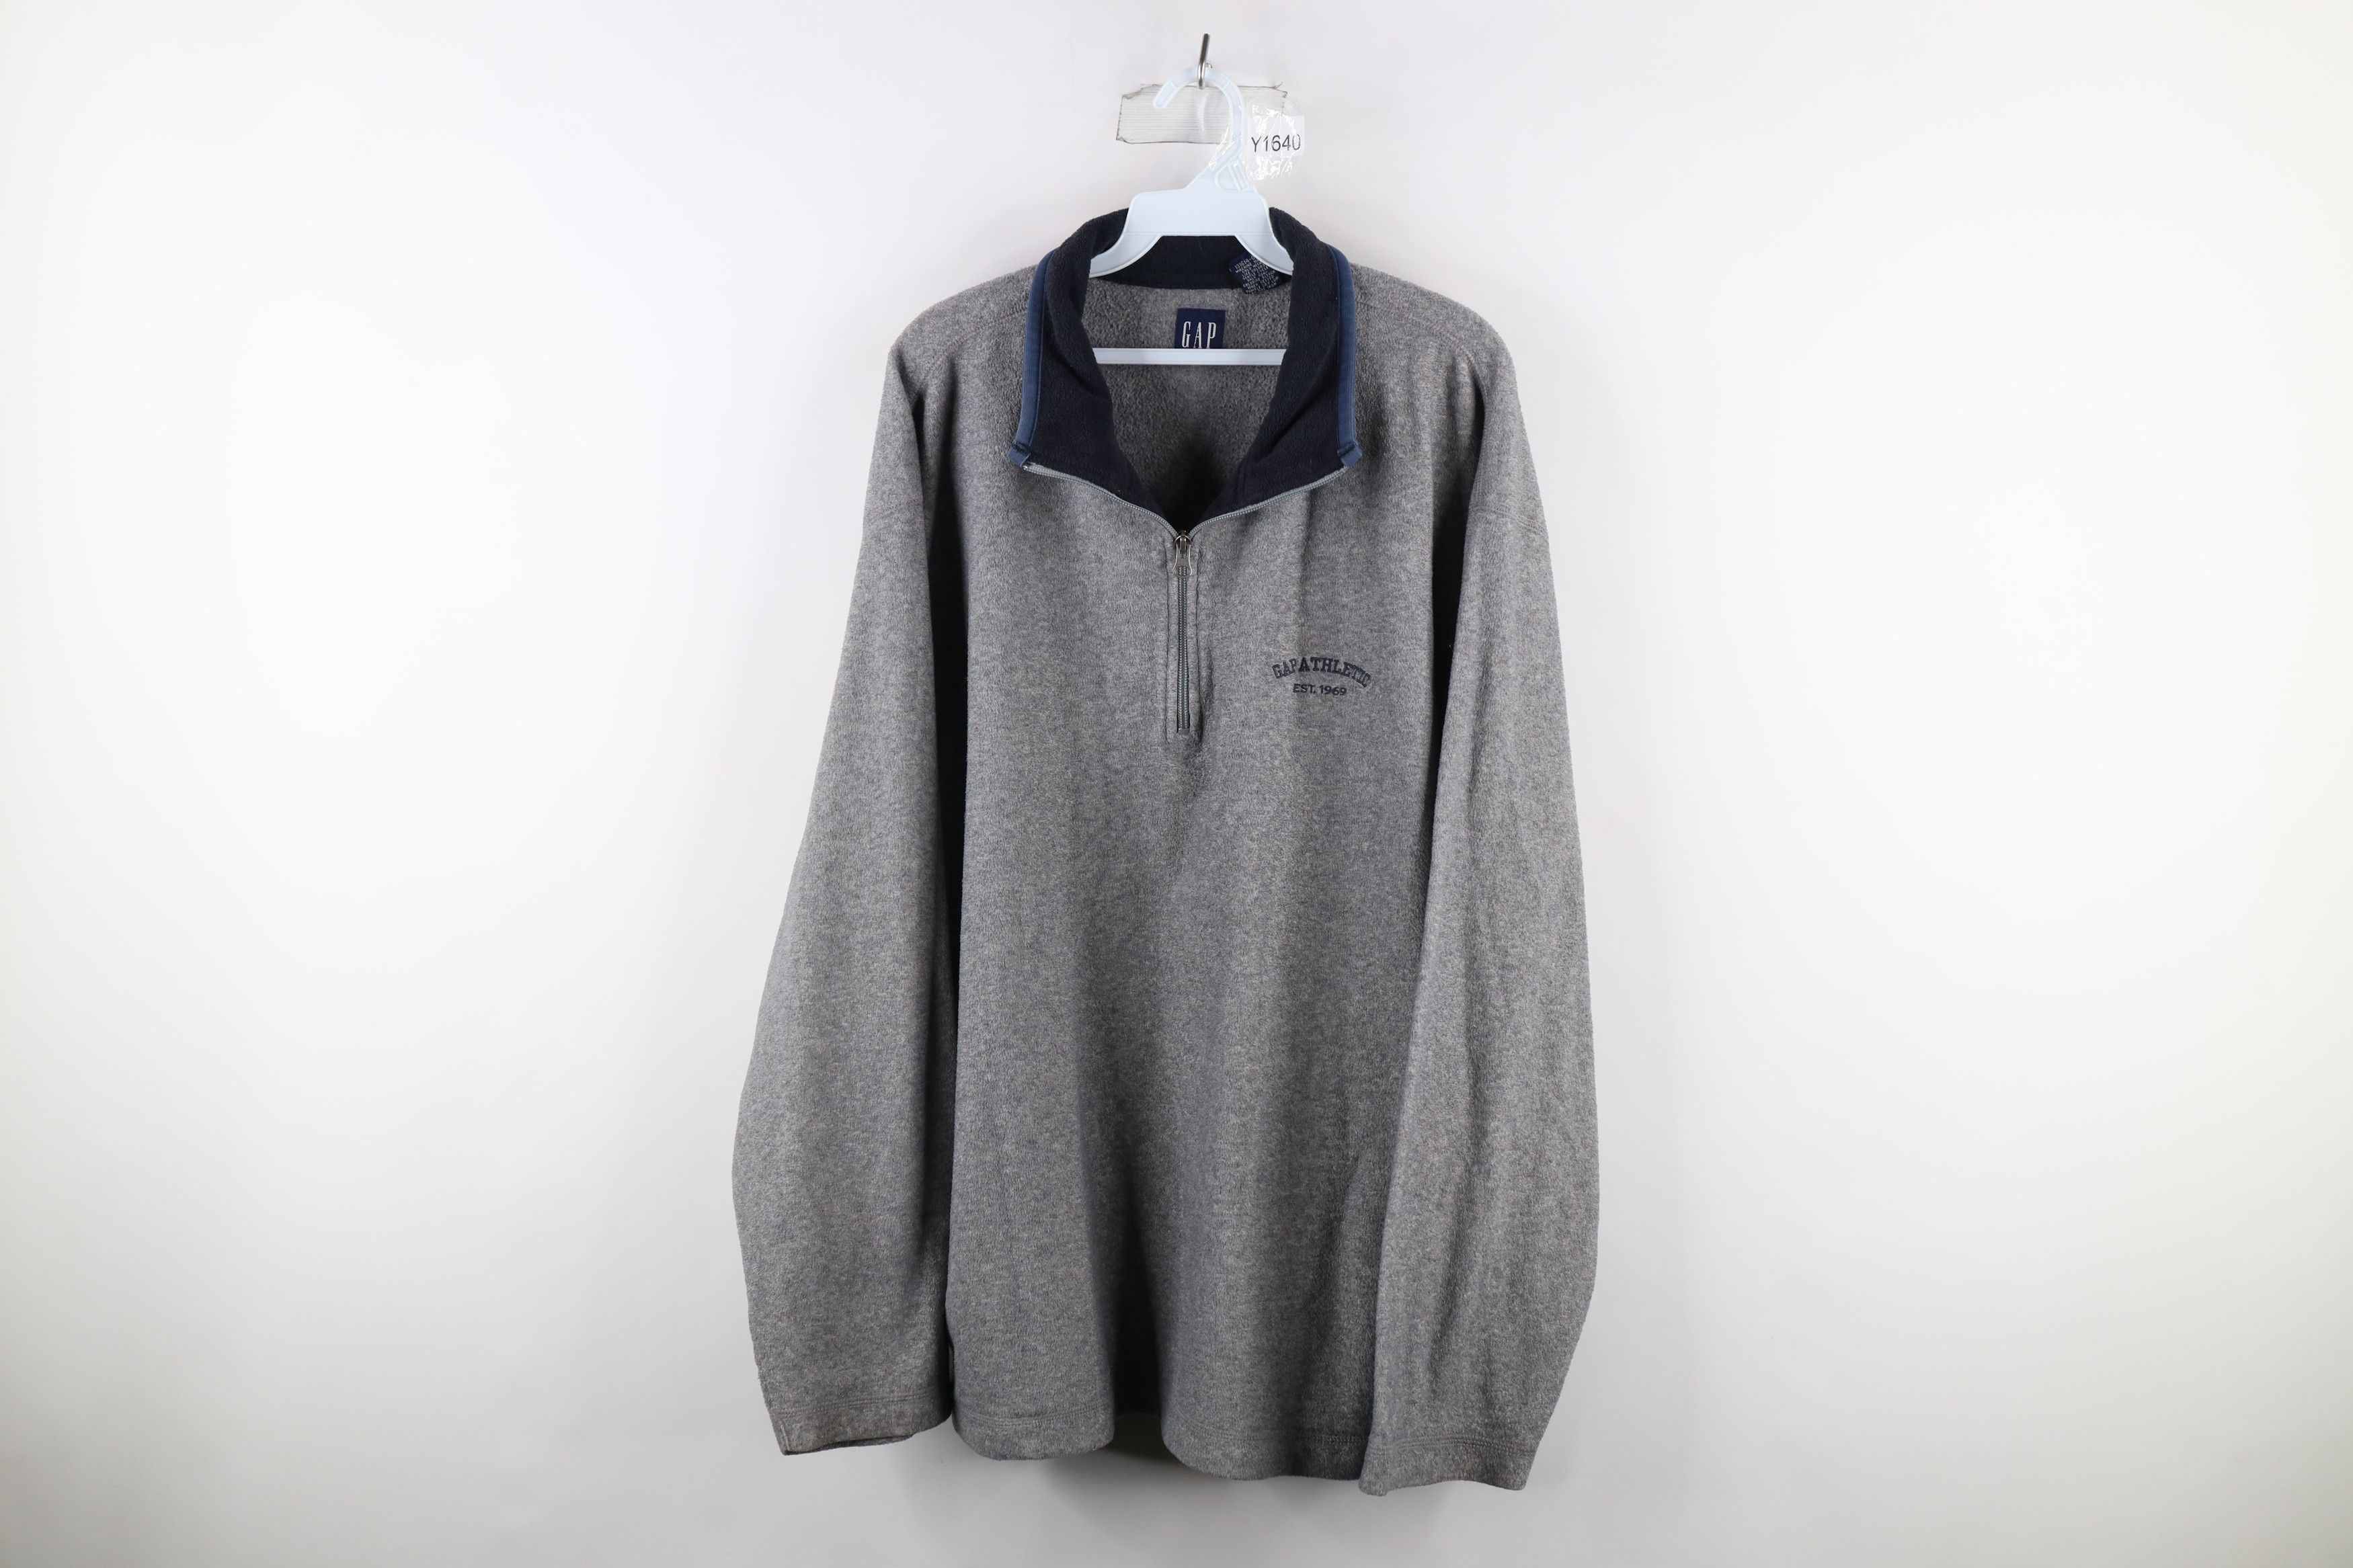 Vintage Vintage 90s Gap Athletic Half Zip Fleece Pullover Sweater Size US XL / EU 56 / 4 - 1 Preview